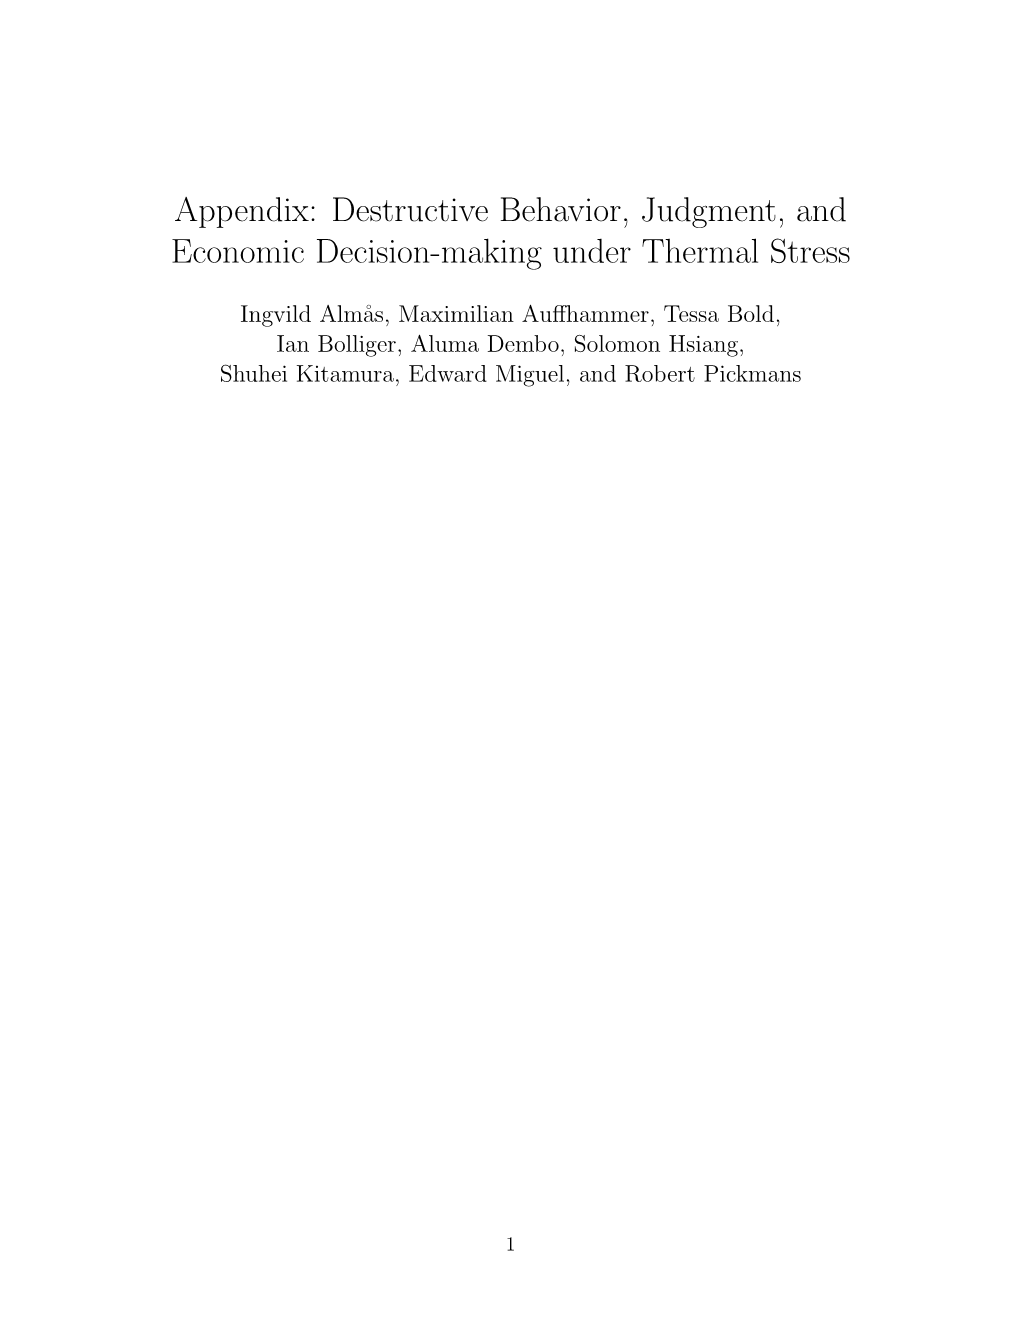 Appendix: Destructive Behavior, Judgment, and Economic Decision-Making Under Thermal Stress